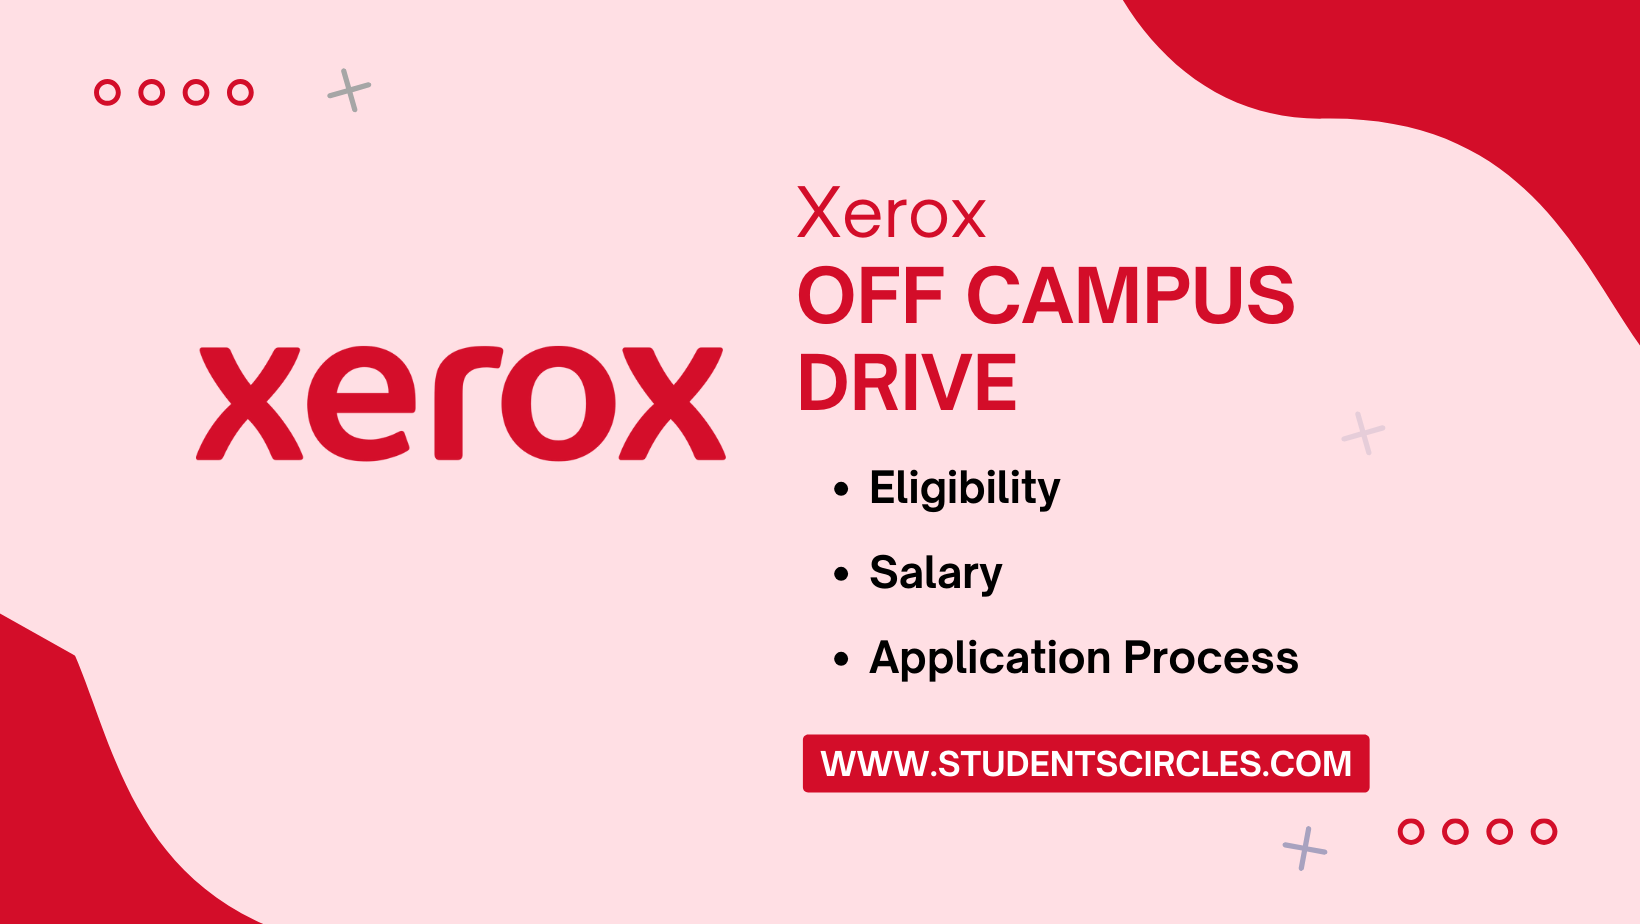 Xerox Off Campus Drive